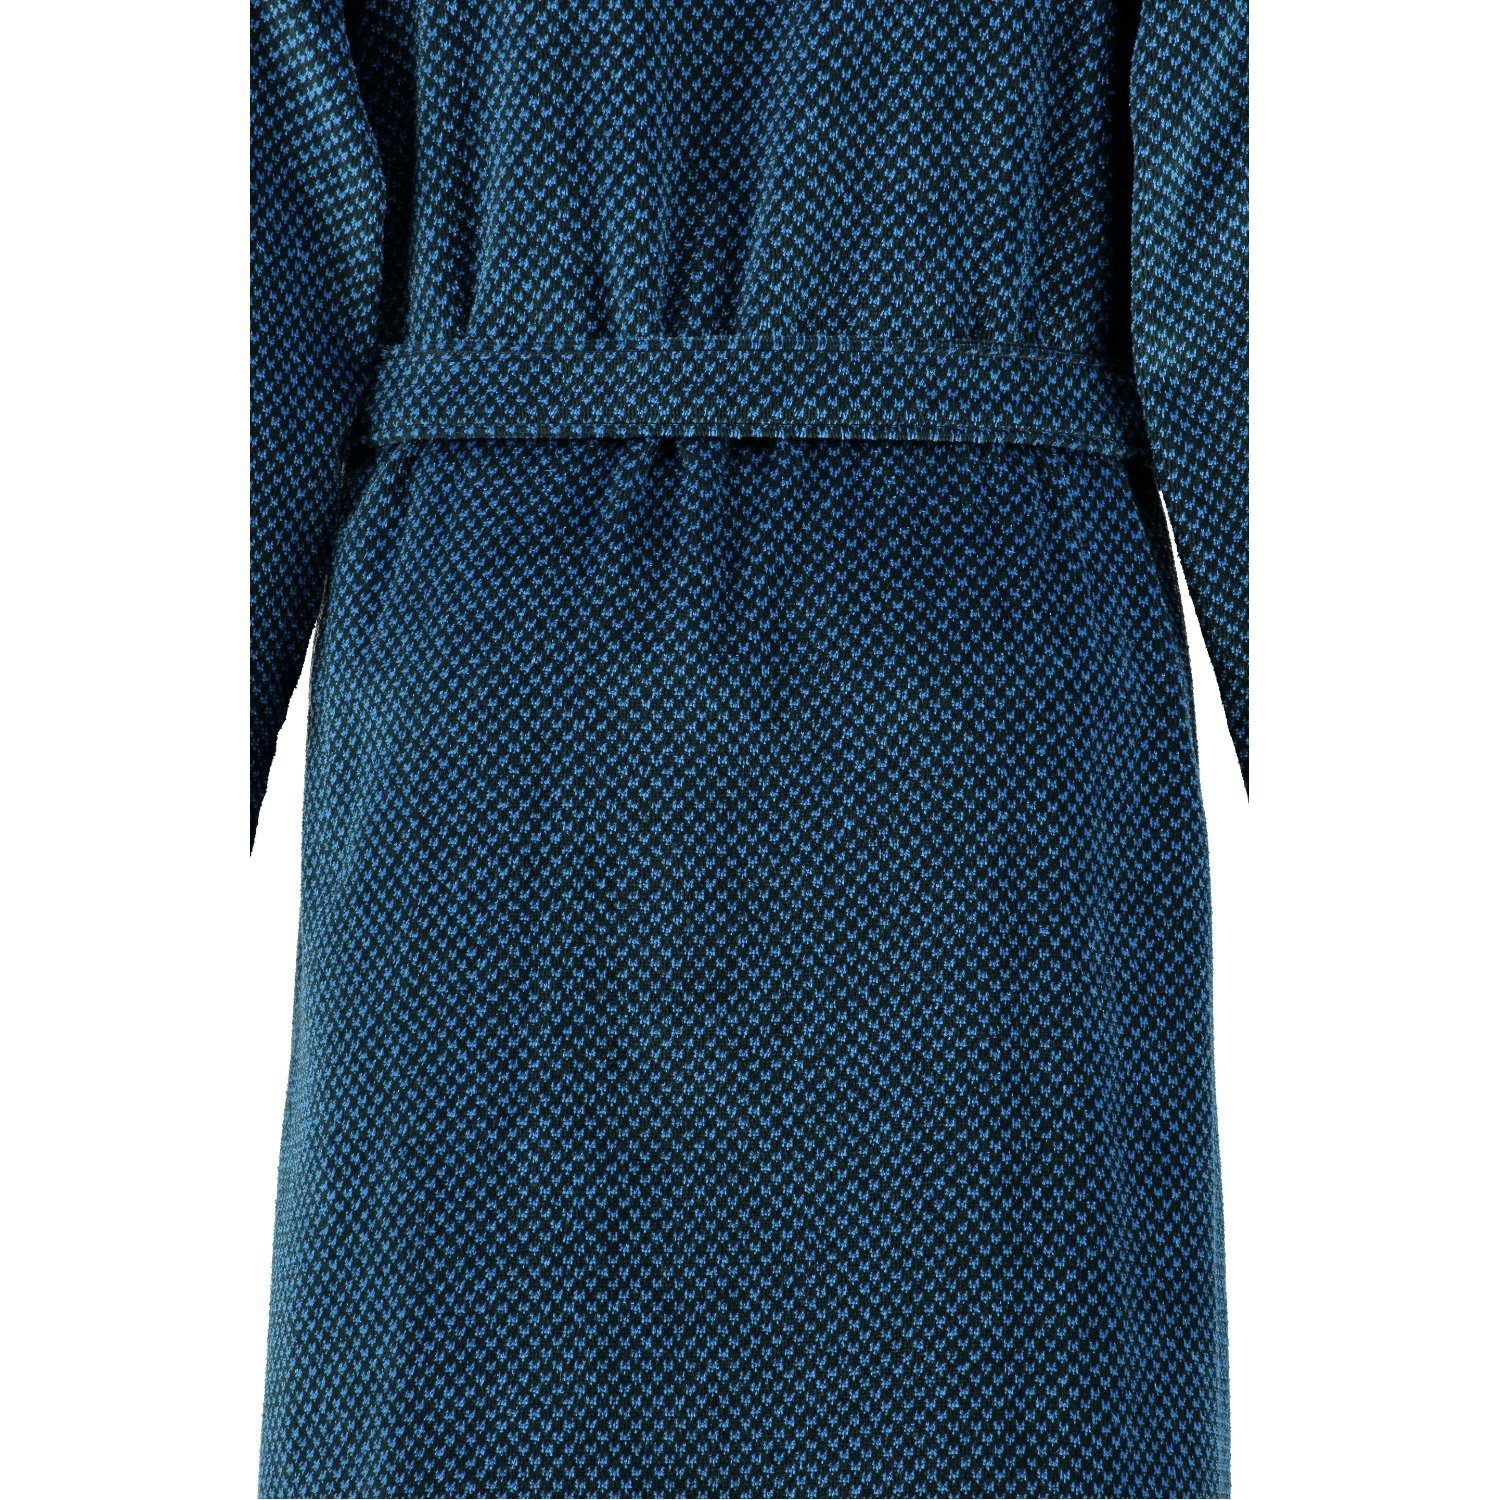 19 Herrenbademantel schwarz Cawö 4839, blau Form Baumwolle, Kimono Gürtel, Langform, Kimonoform,